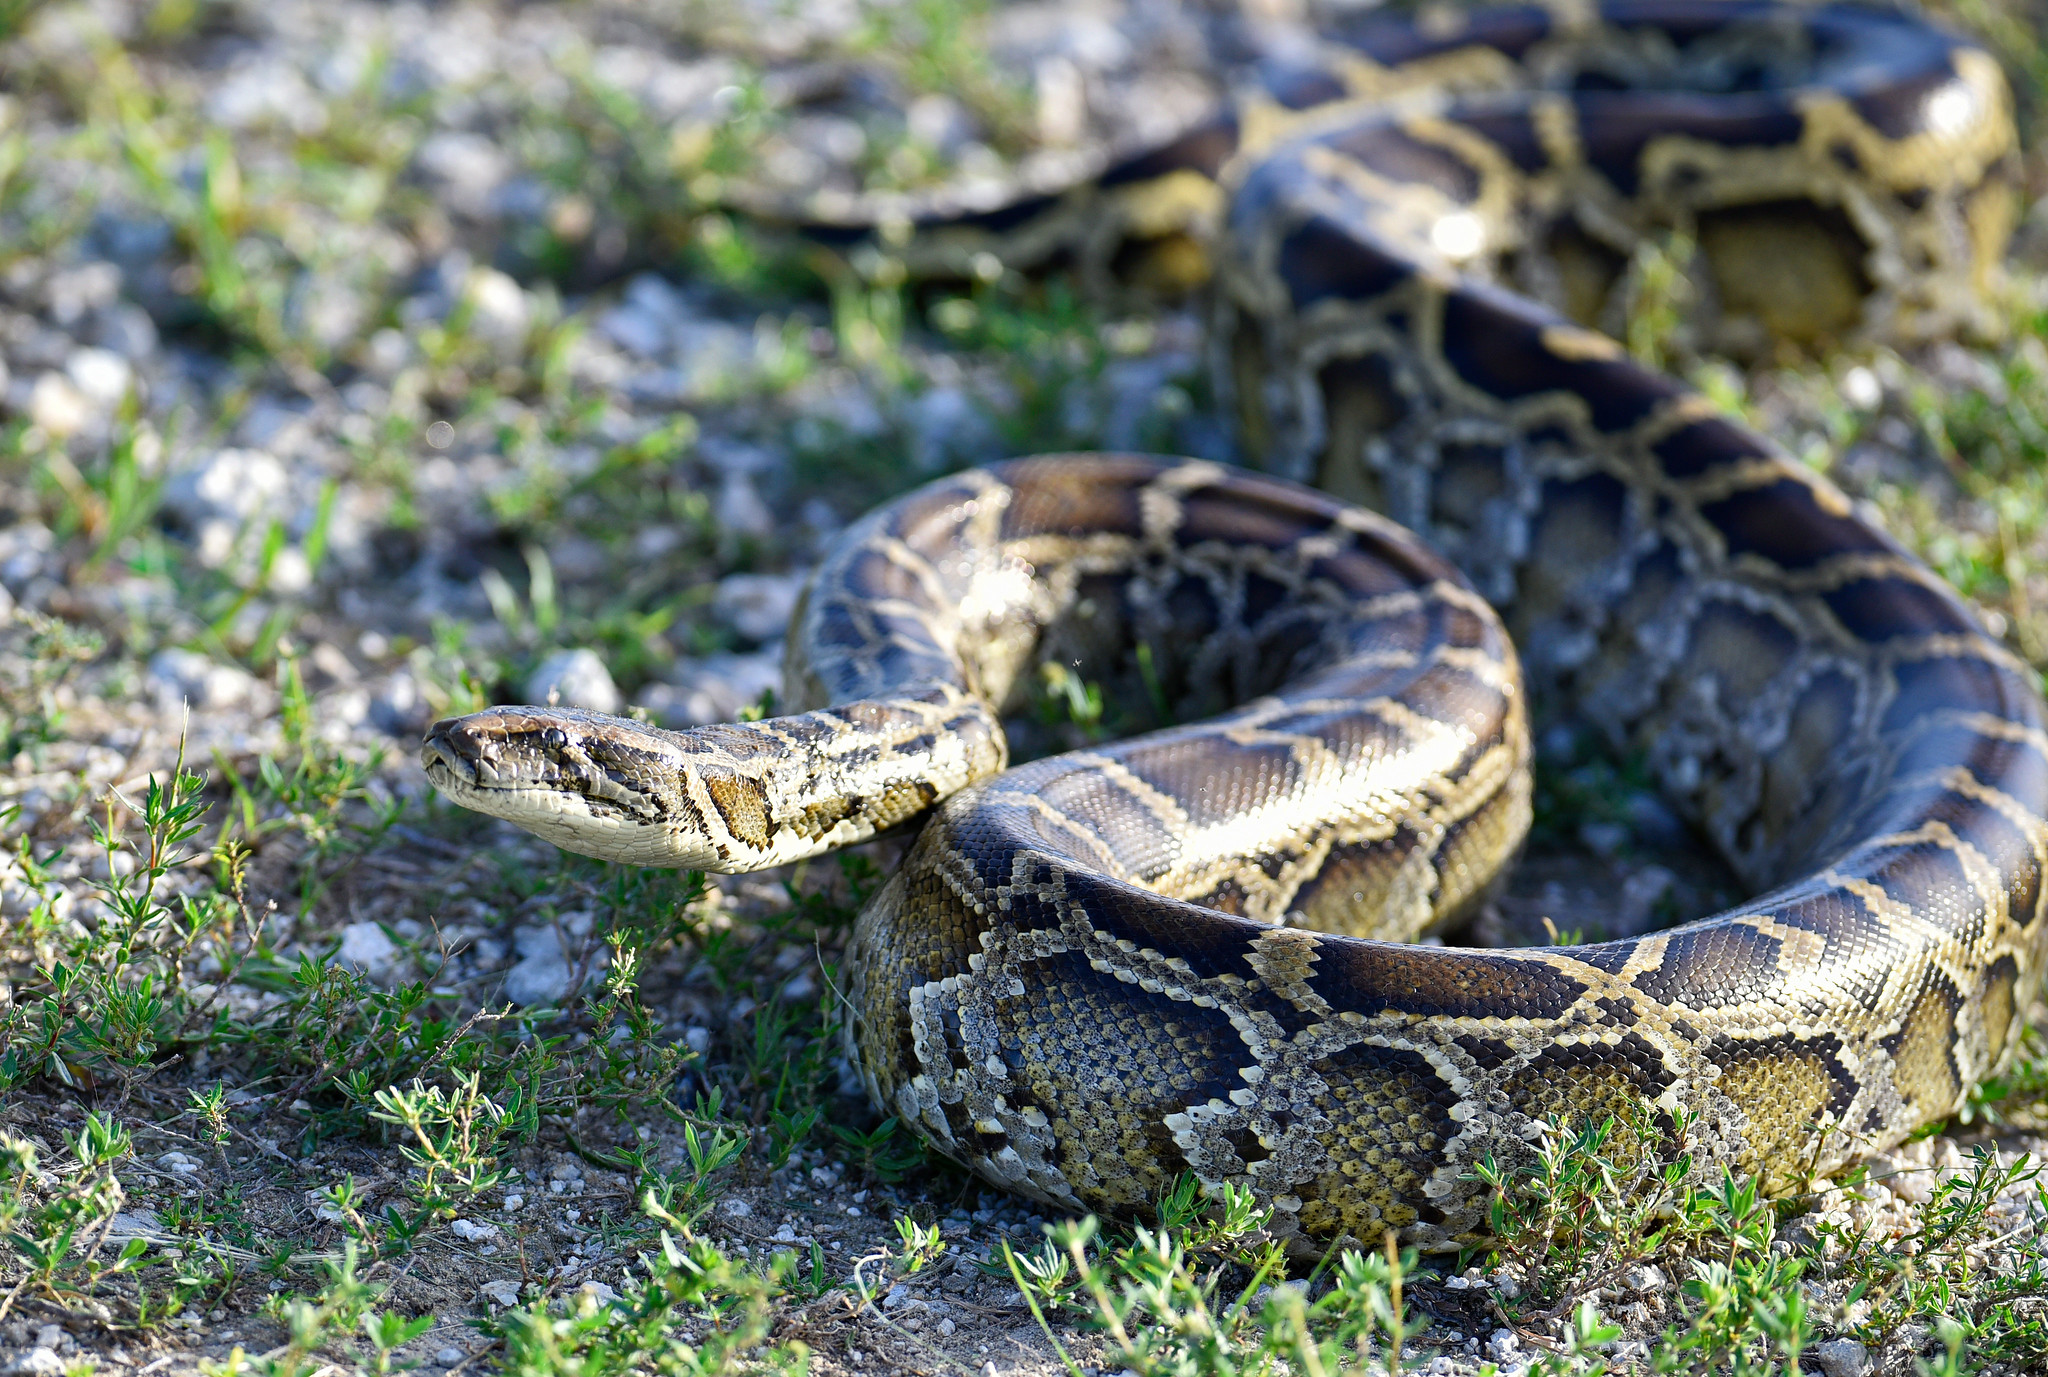 How Are Burmese Pythons Threatening the Everglades Ecosystem?